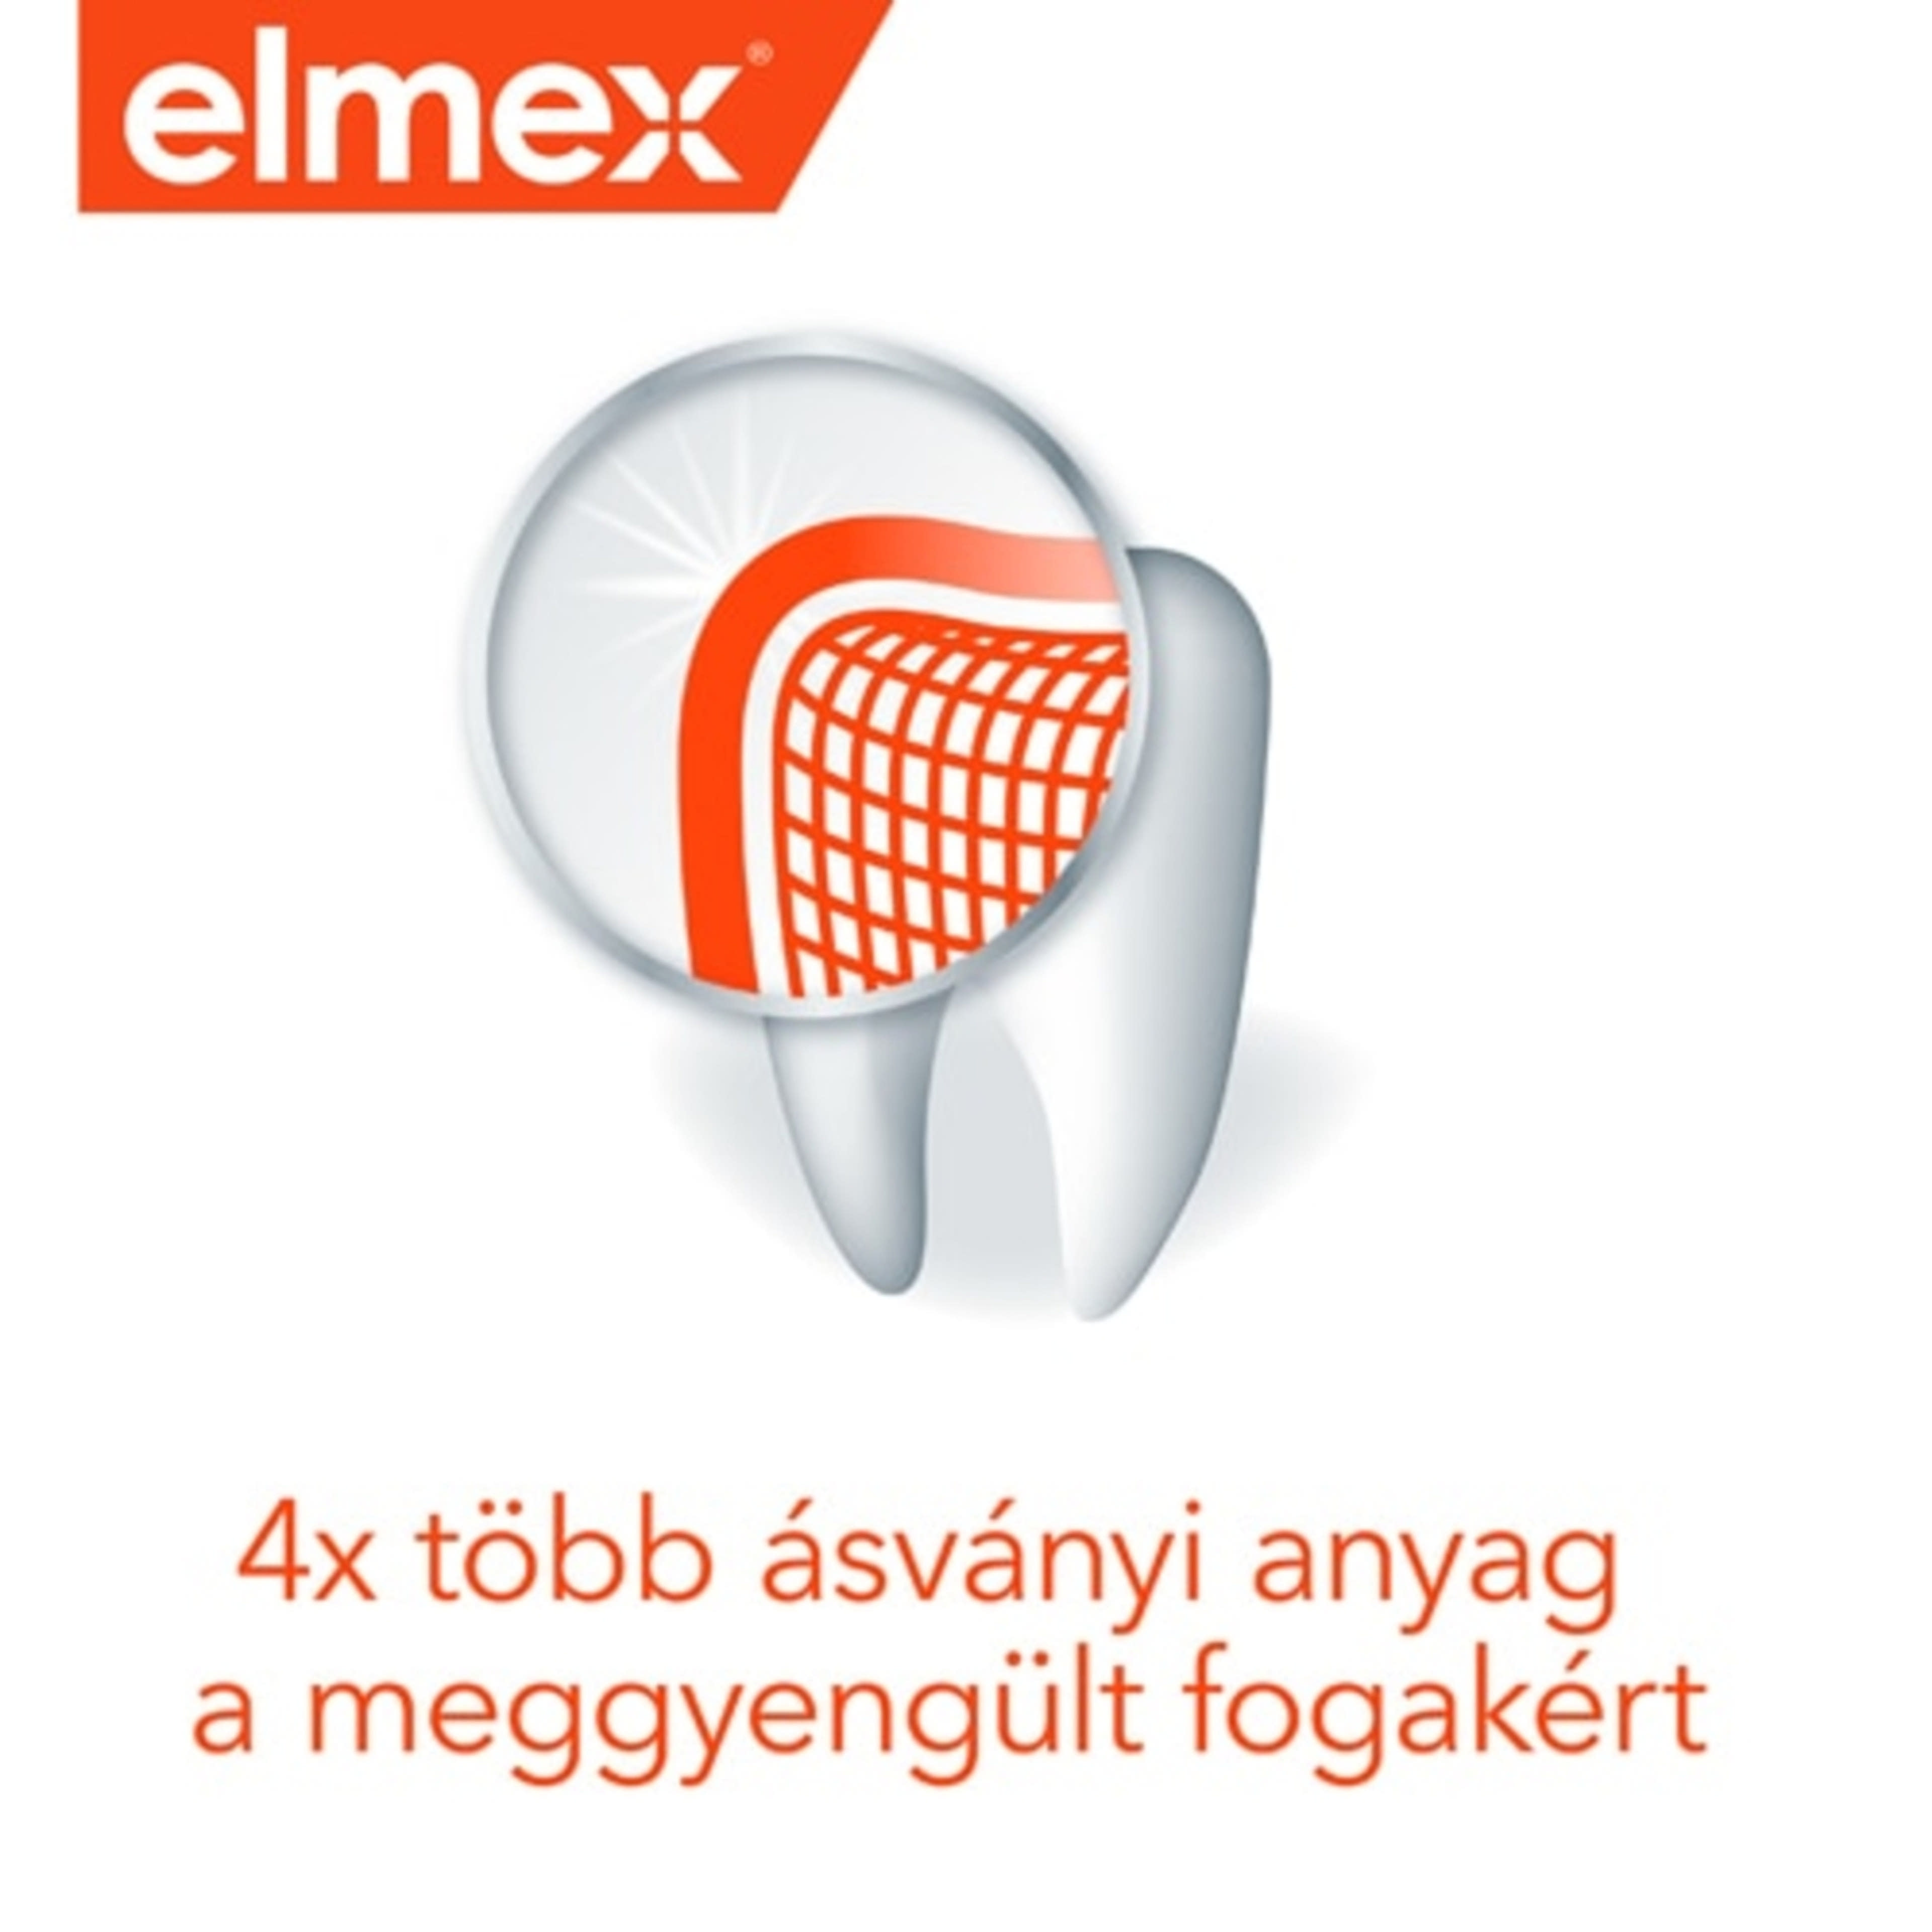 Elmex Anti-Caries Protection Professional fogkrém fogkrém - 75 ml-6